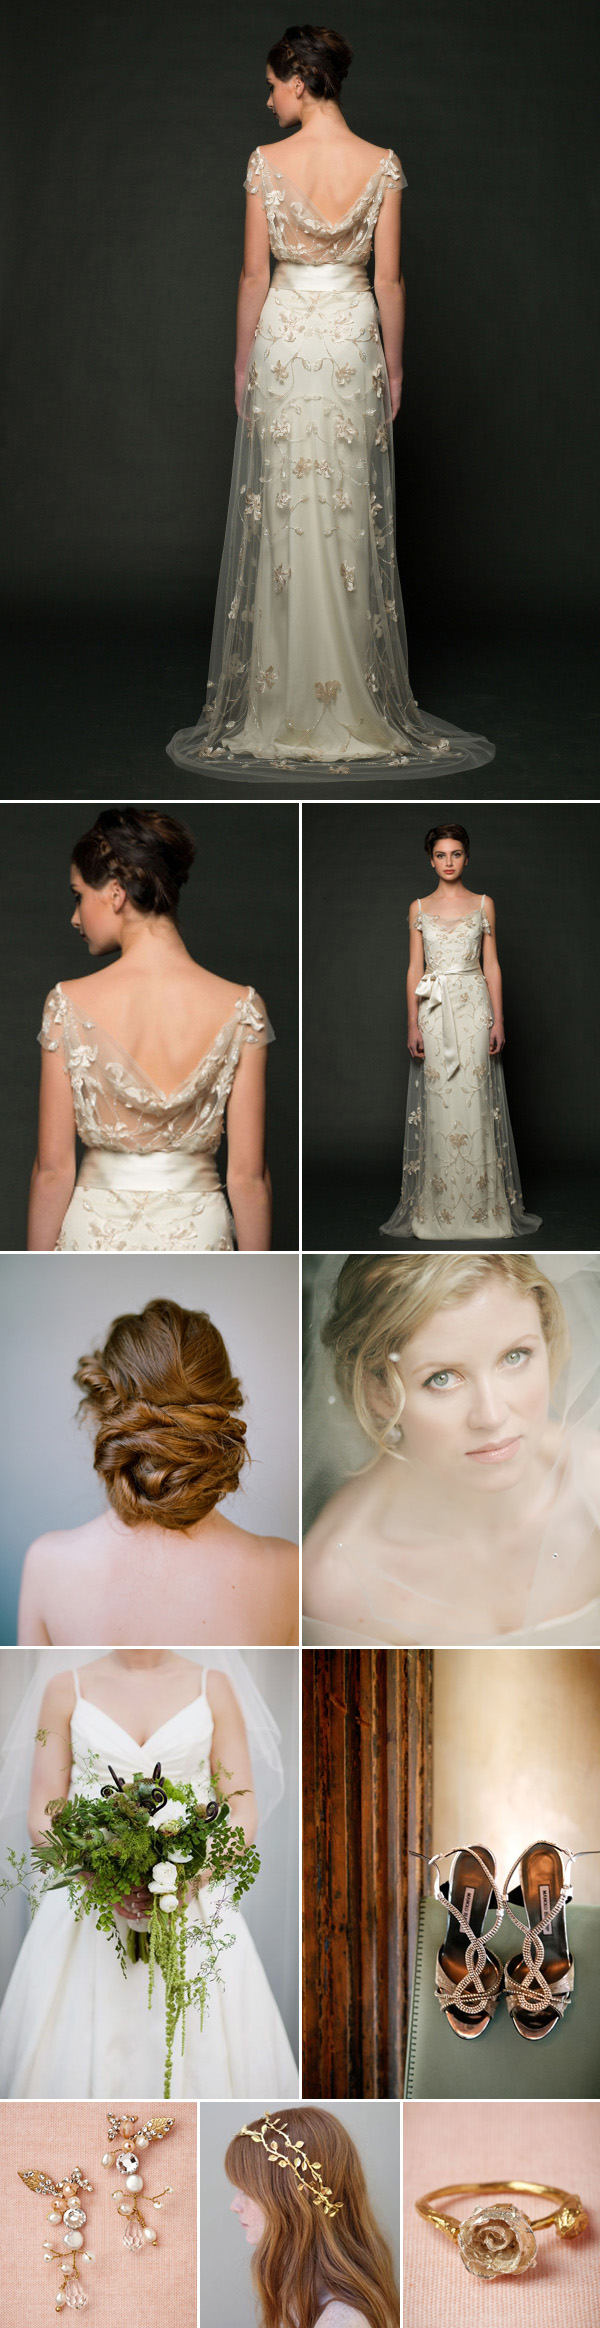 bridal style inspiration boards from bridal market for fall 2014 | via junebugweddings.com